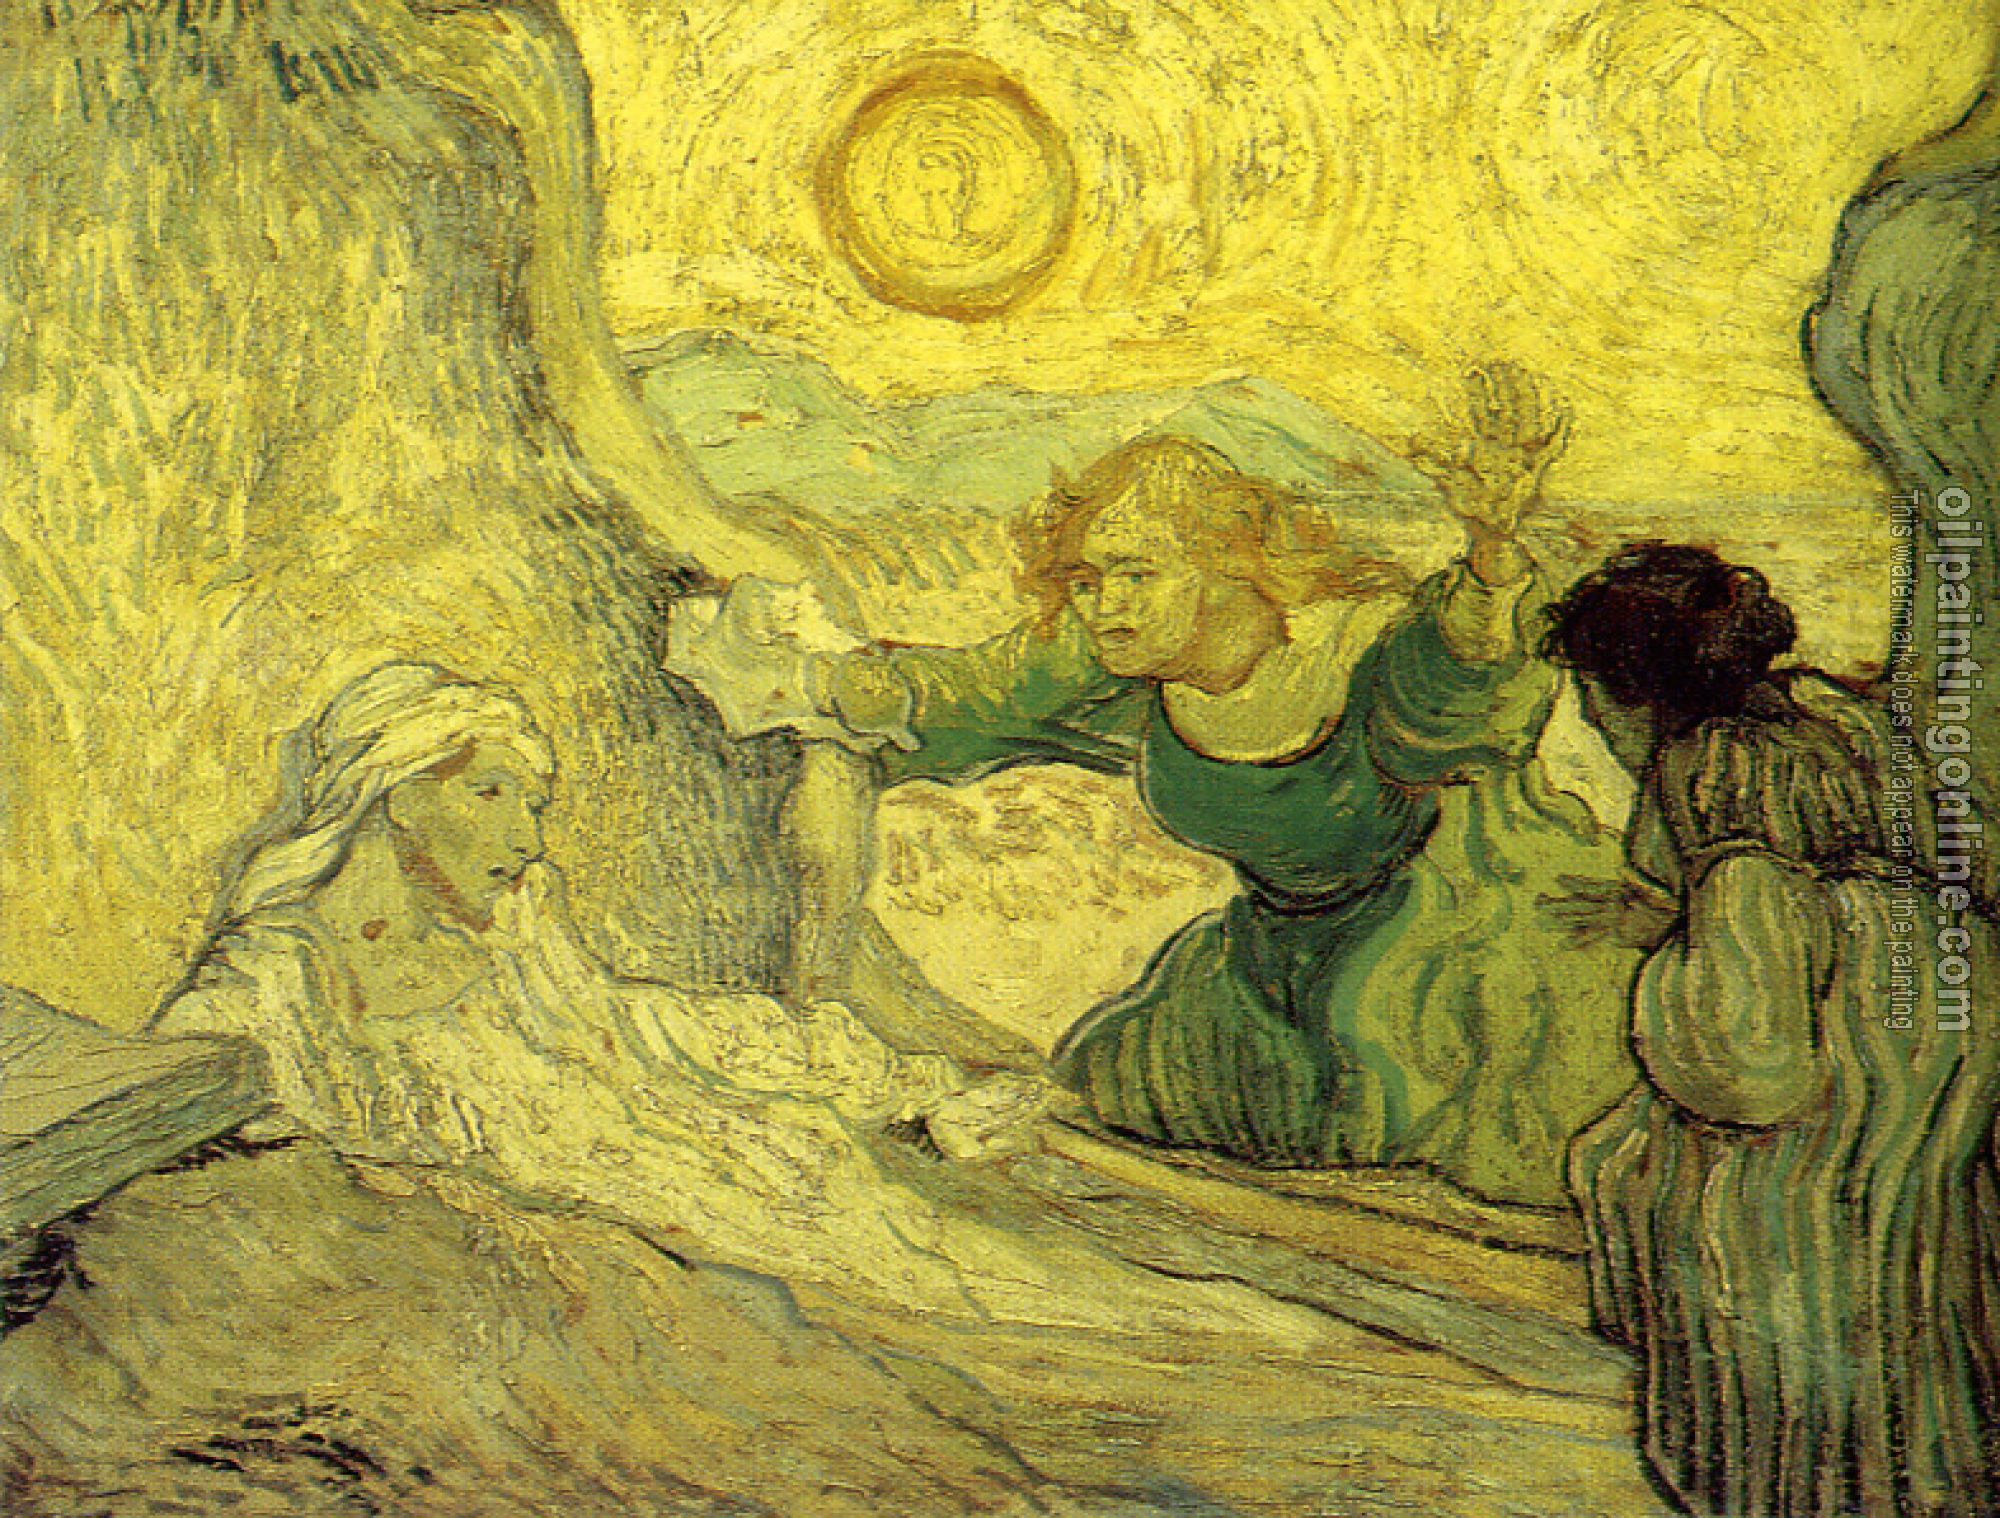 Gogh, Vincent van - The Raising of Lazarus(after Rembrandt)